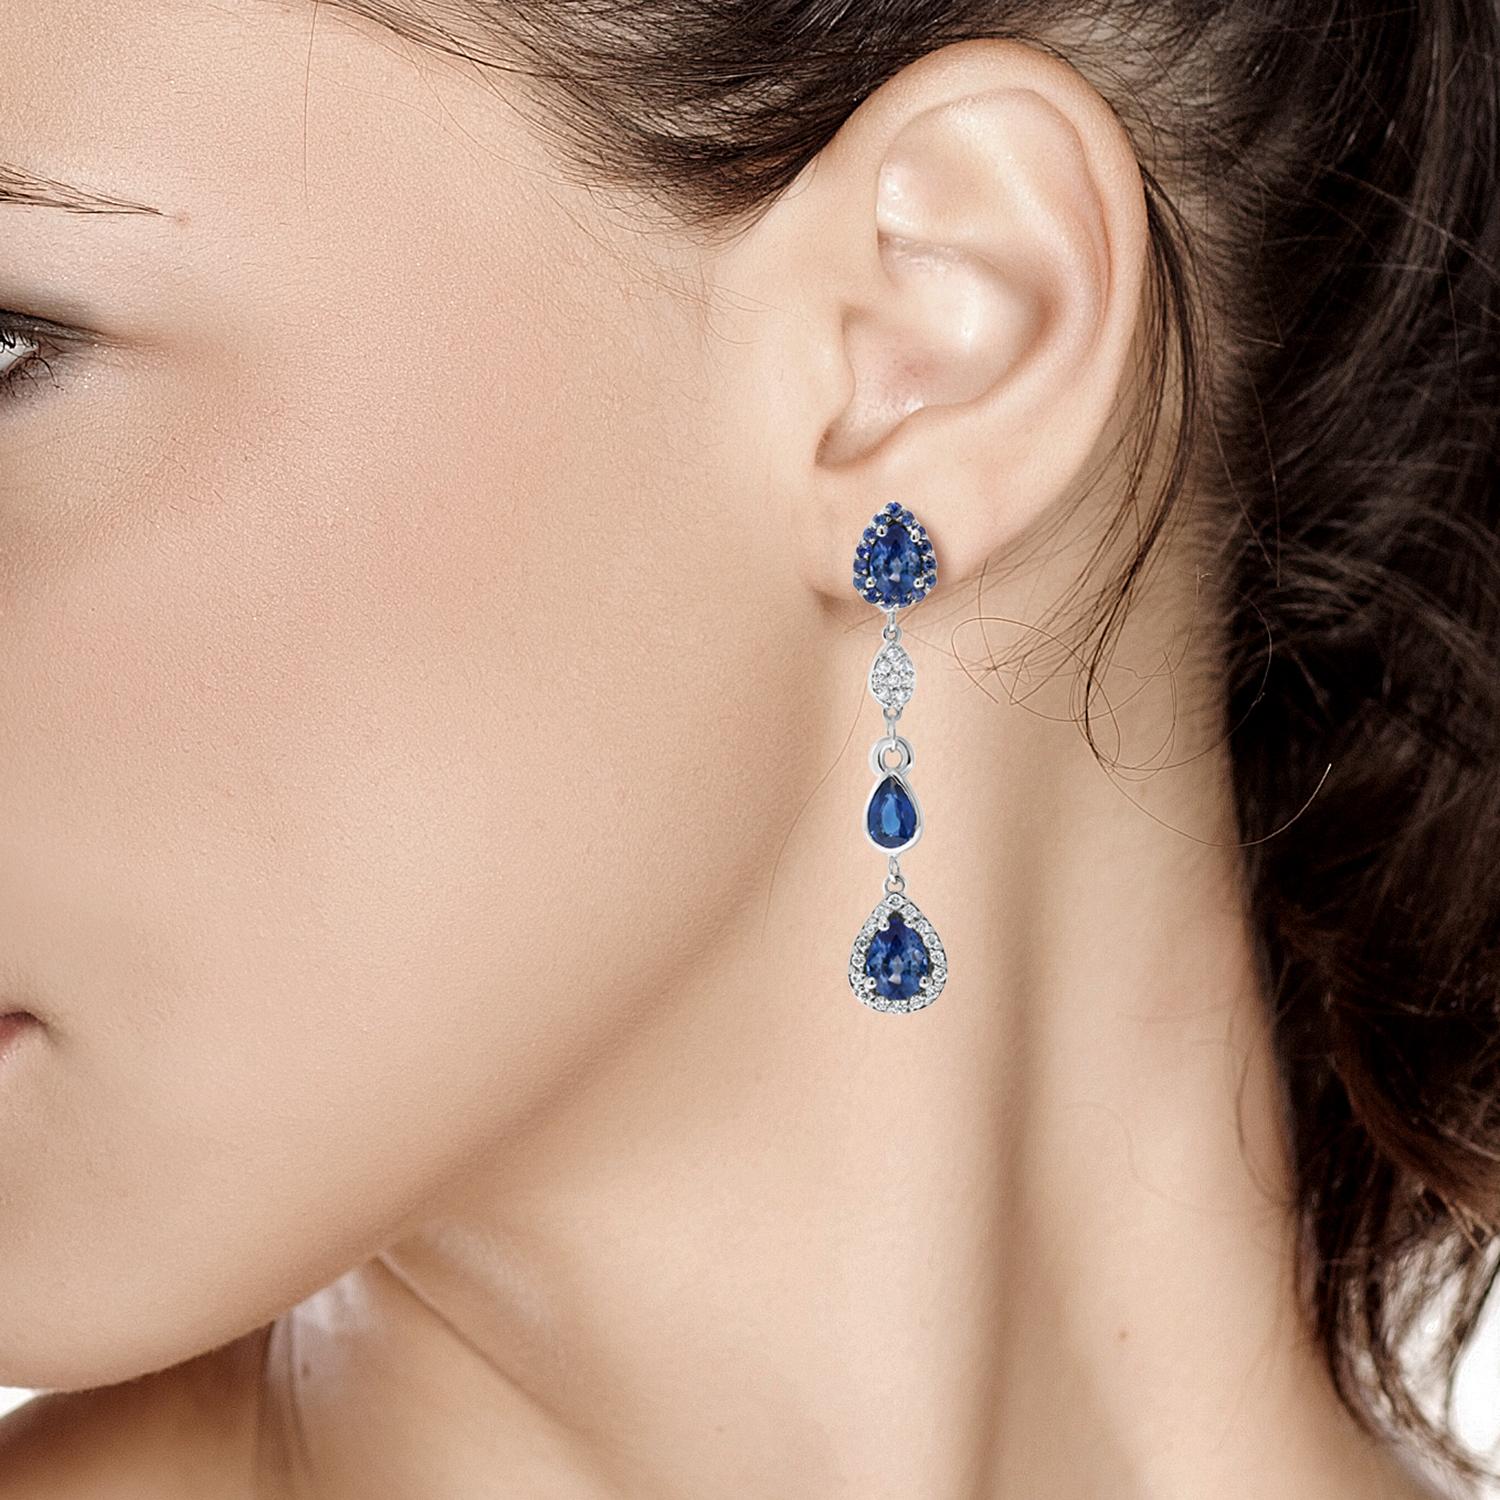 Women's Diamond Earrings with Pear Shape Sapphire Drops Weighing 4.90 Carat